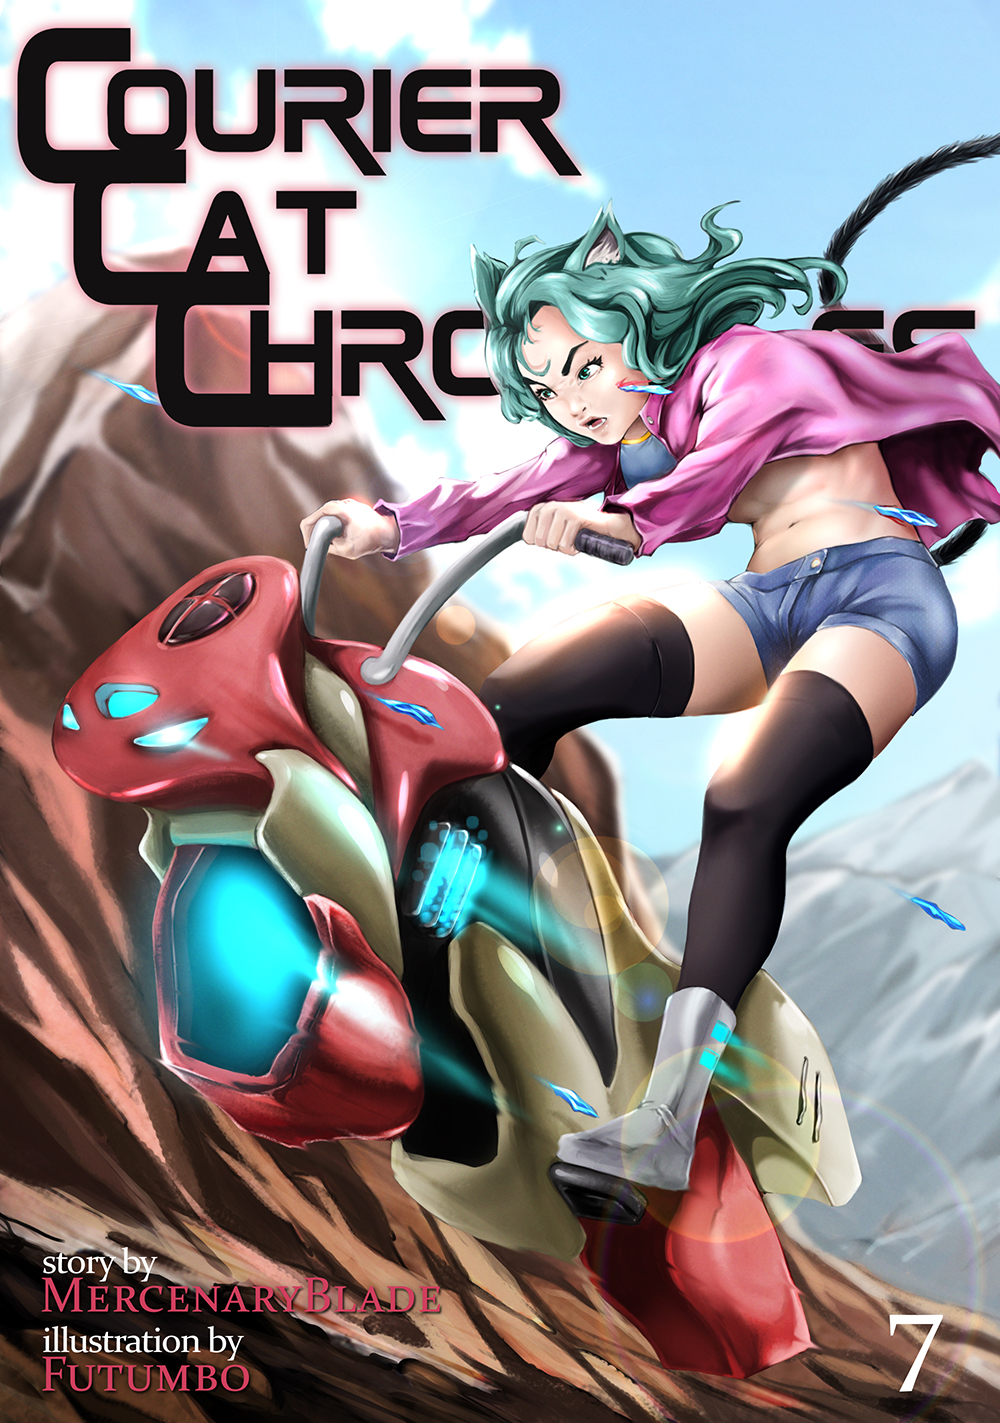 Catgirl Comic #1 Teaser by poorman379 on DeviantArt